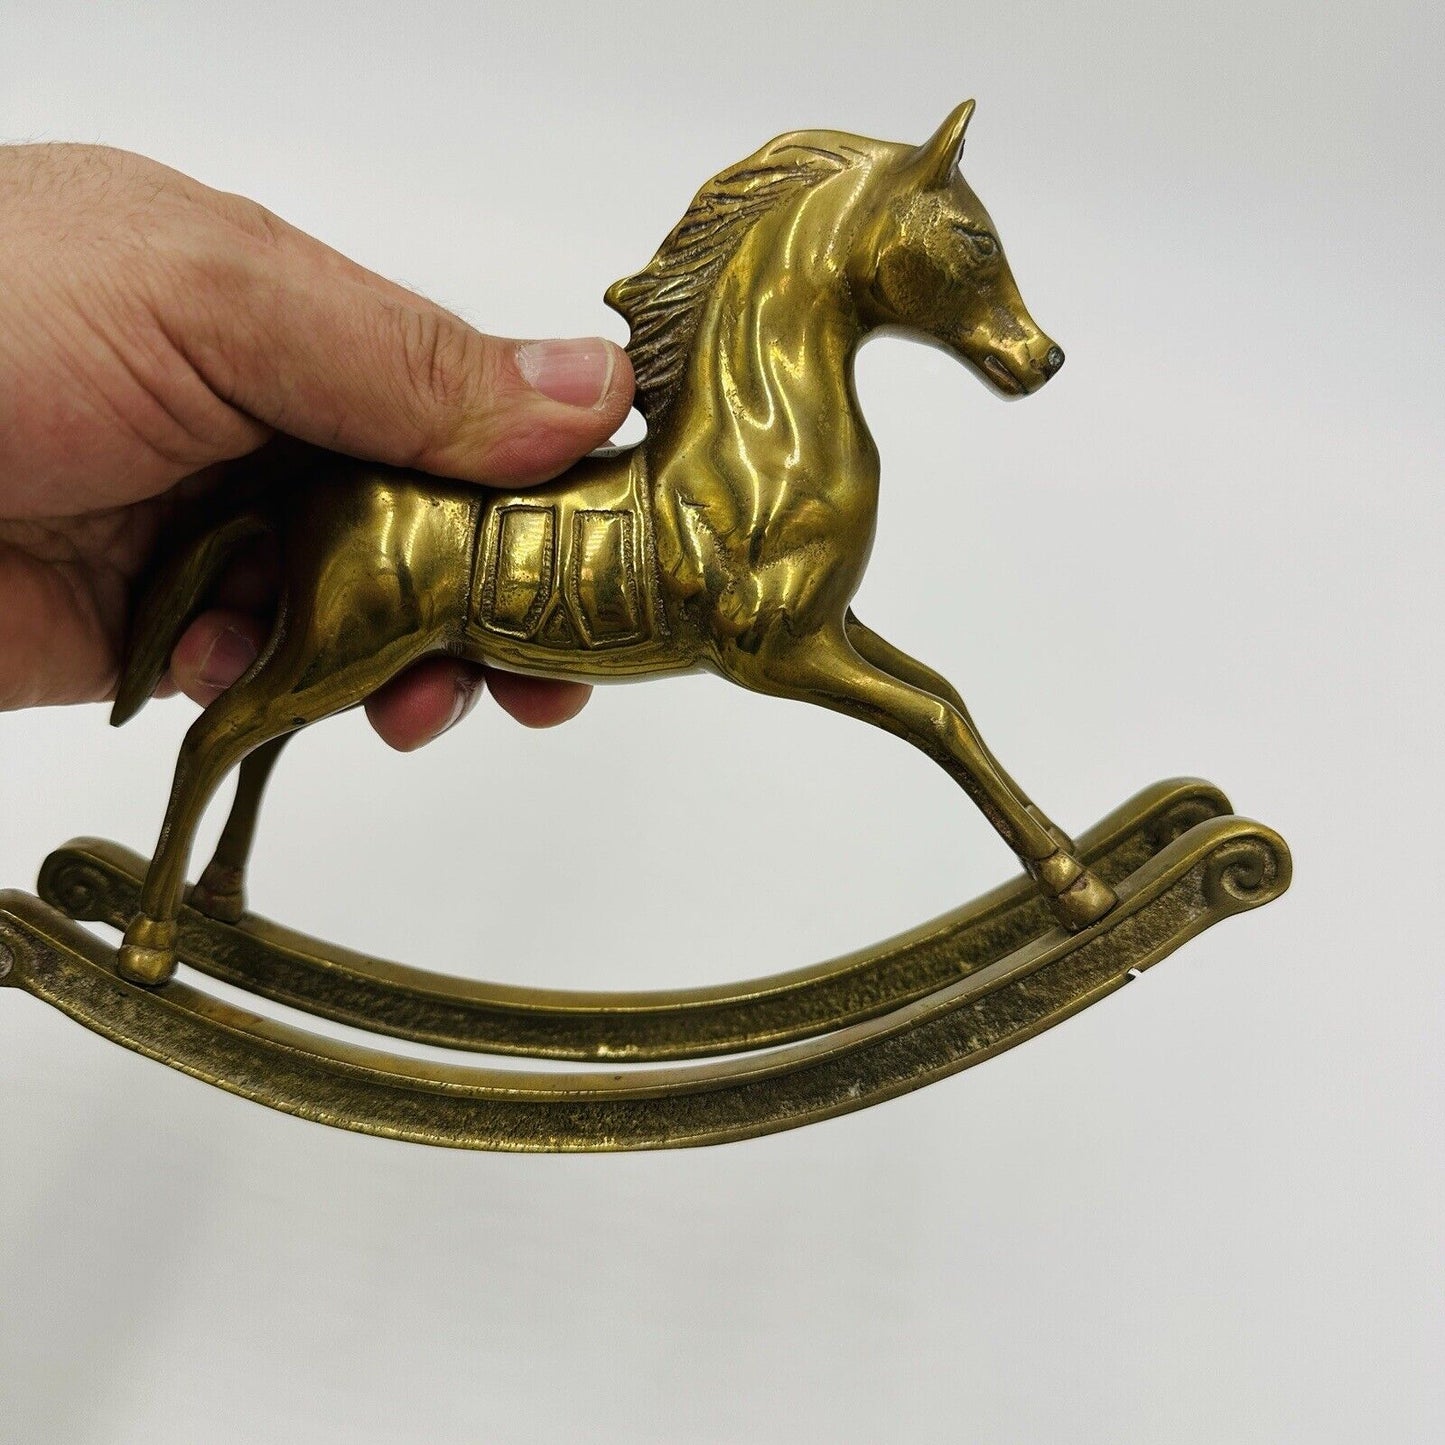 Vintage Solid Brass Rocking Horse Figurine Tail Down Paperweight sculpture